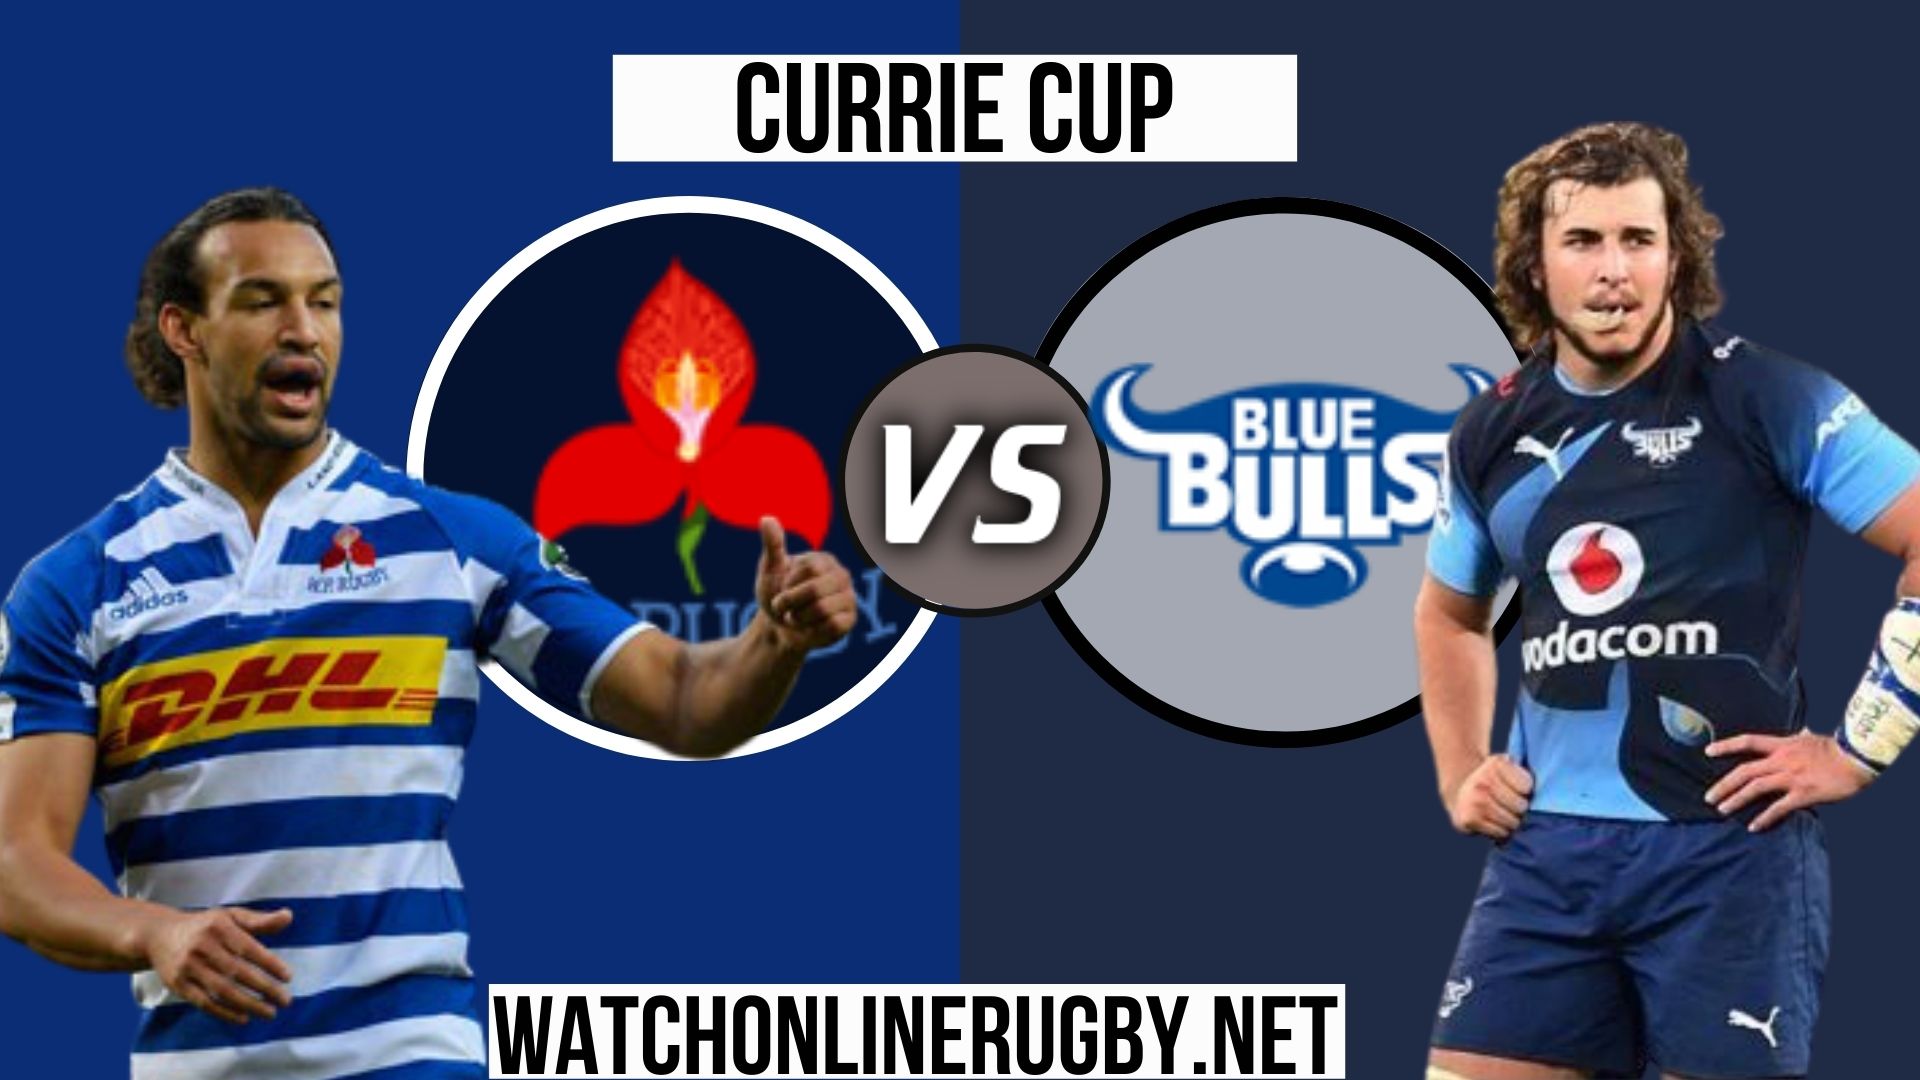 bulls-vs-w-province-live-rugby